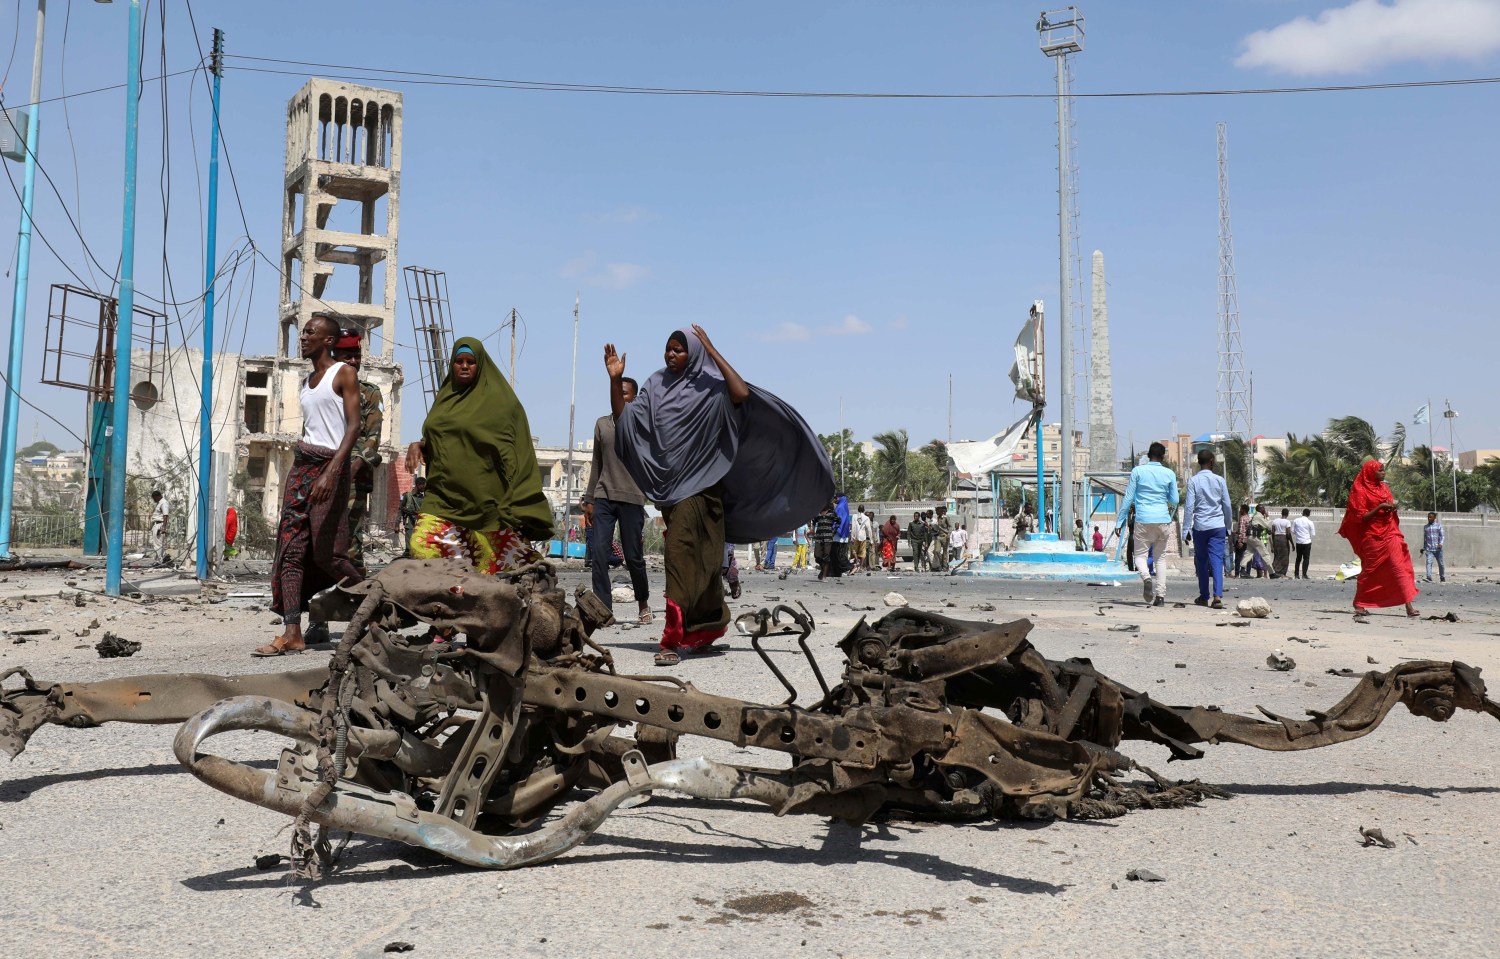 Somali women walk past the wreckage of a car involved in an explosion near the president's residence in Mogadishu, Somalia December 22, 2018. REUTERS/Feisal Omar - RC195E3B8230